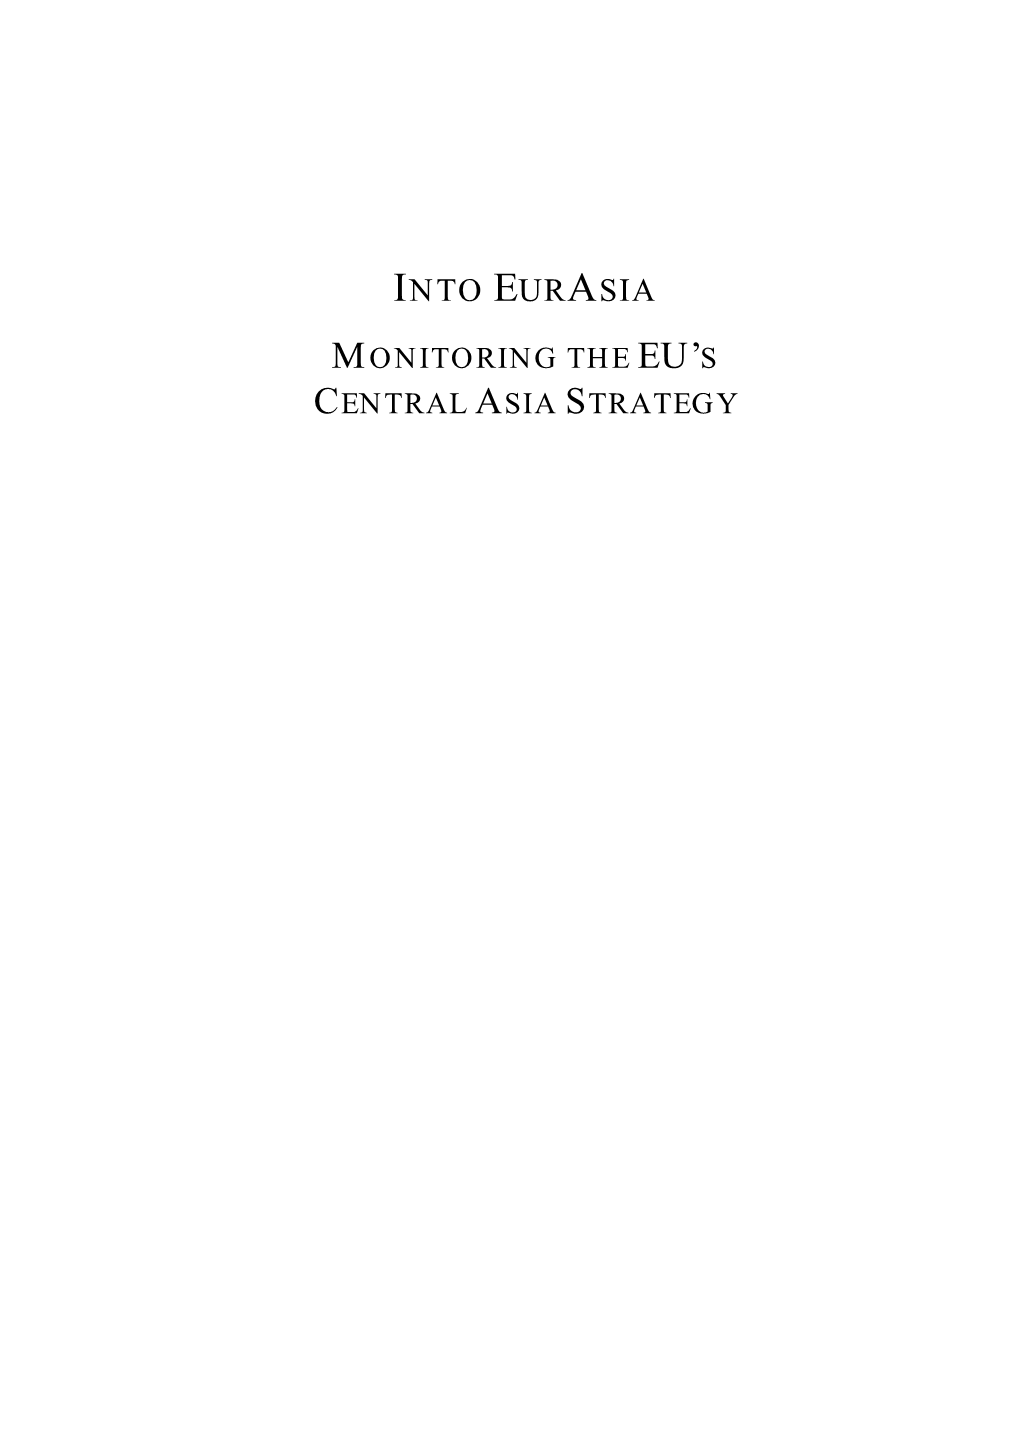 Into Eurasia